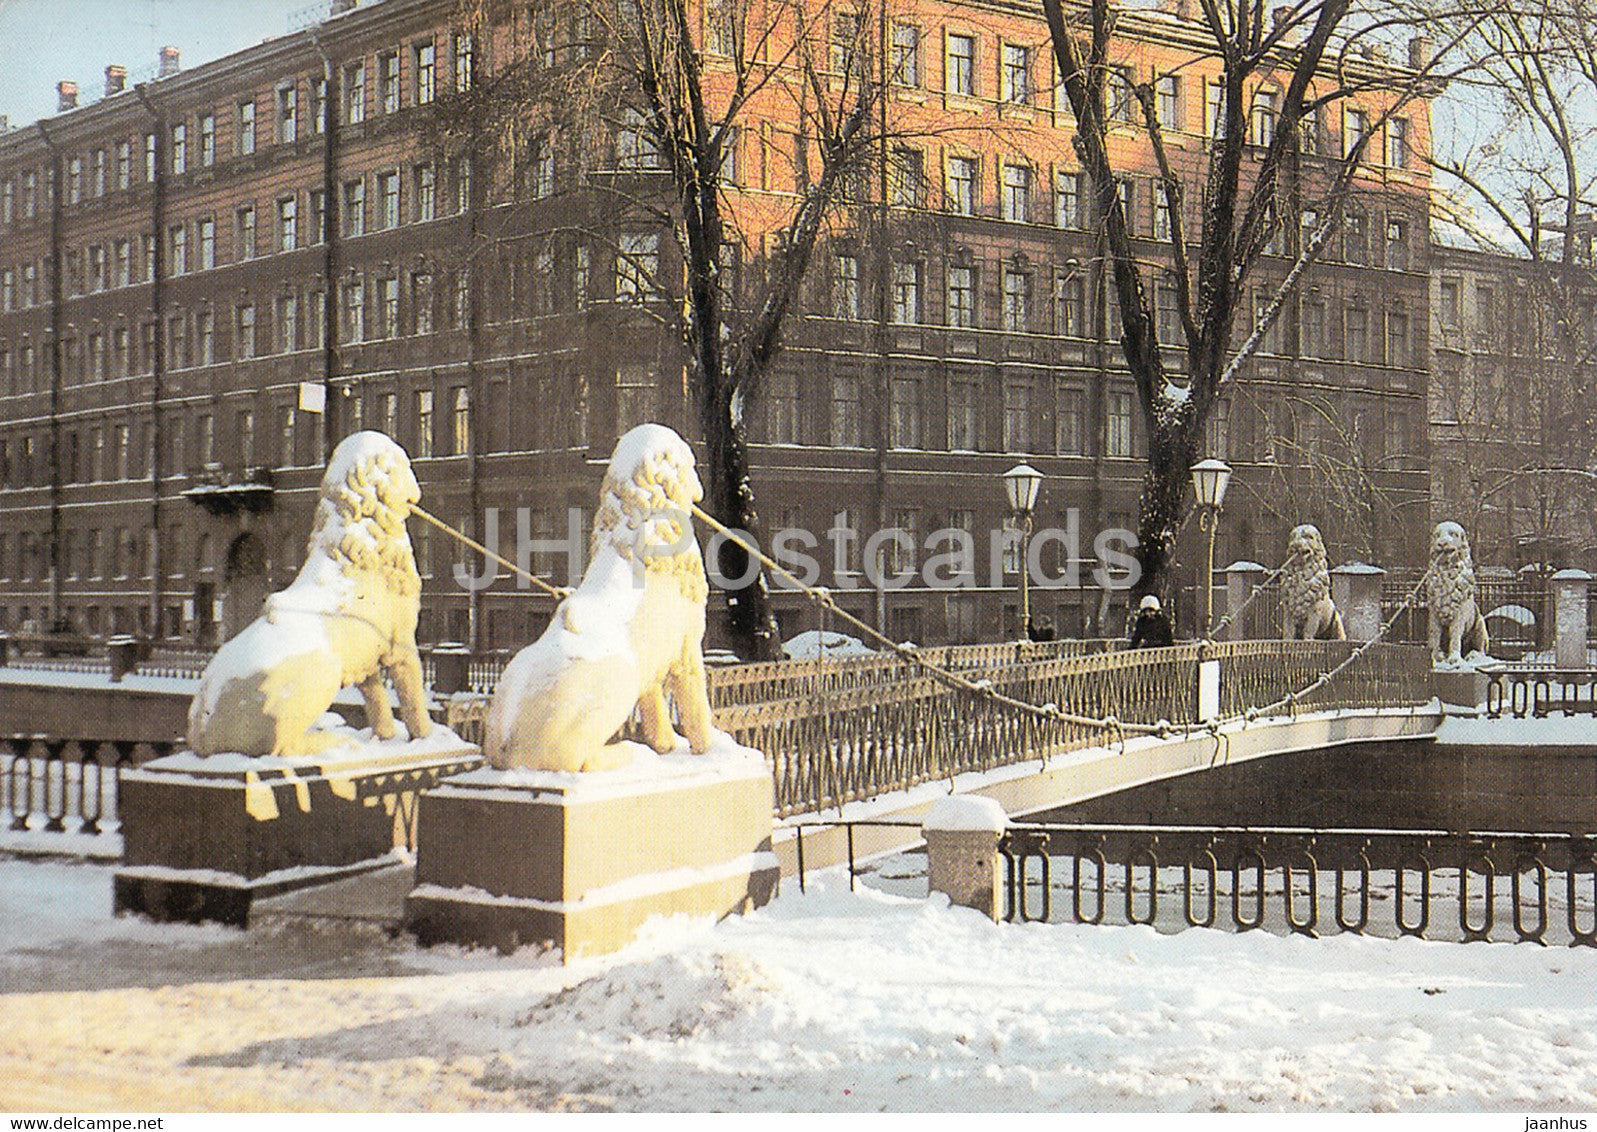 Leningrad - St Petersburg - Lion's Bridge - 1981 - Russia USSR - used - JH Postcards